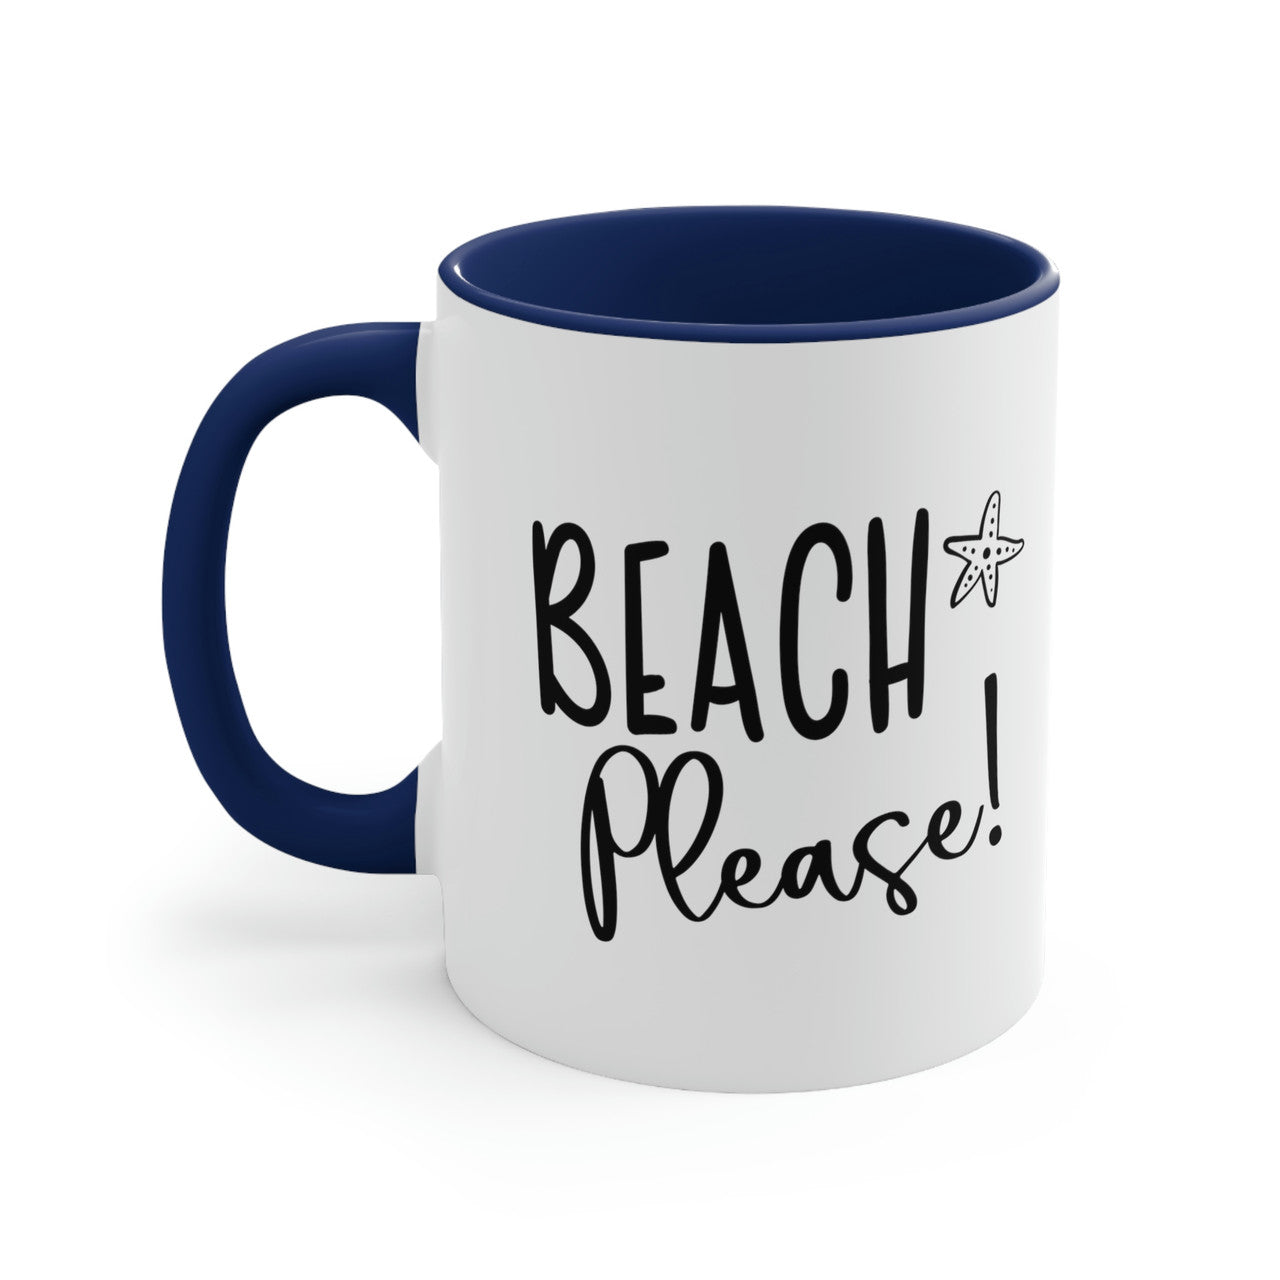 BEACH Please! Ceramic Beach Coffee Mug, 5 Colors Mugs New England Trading Co Navy  